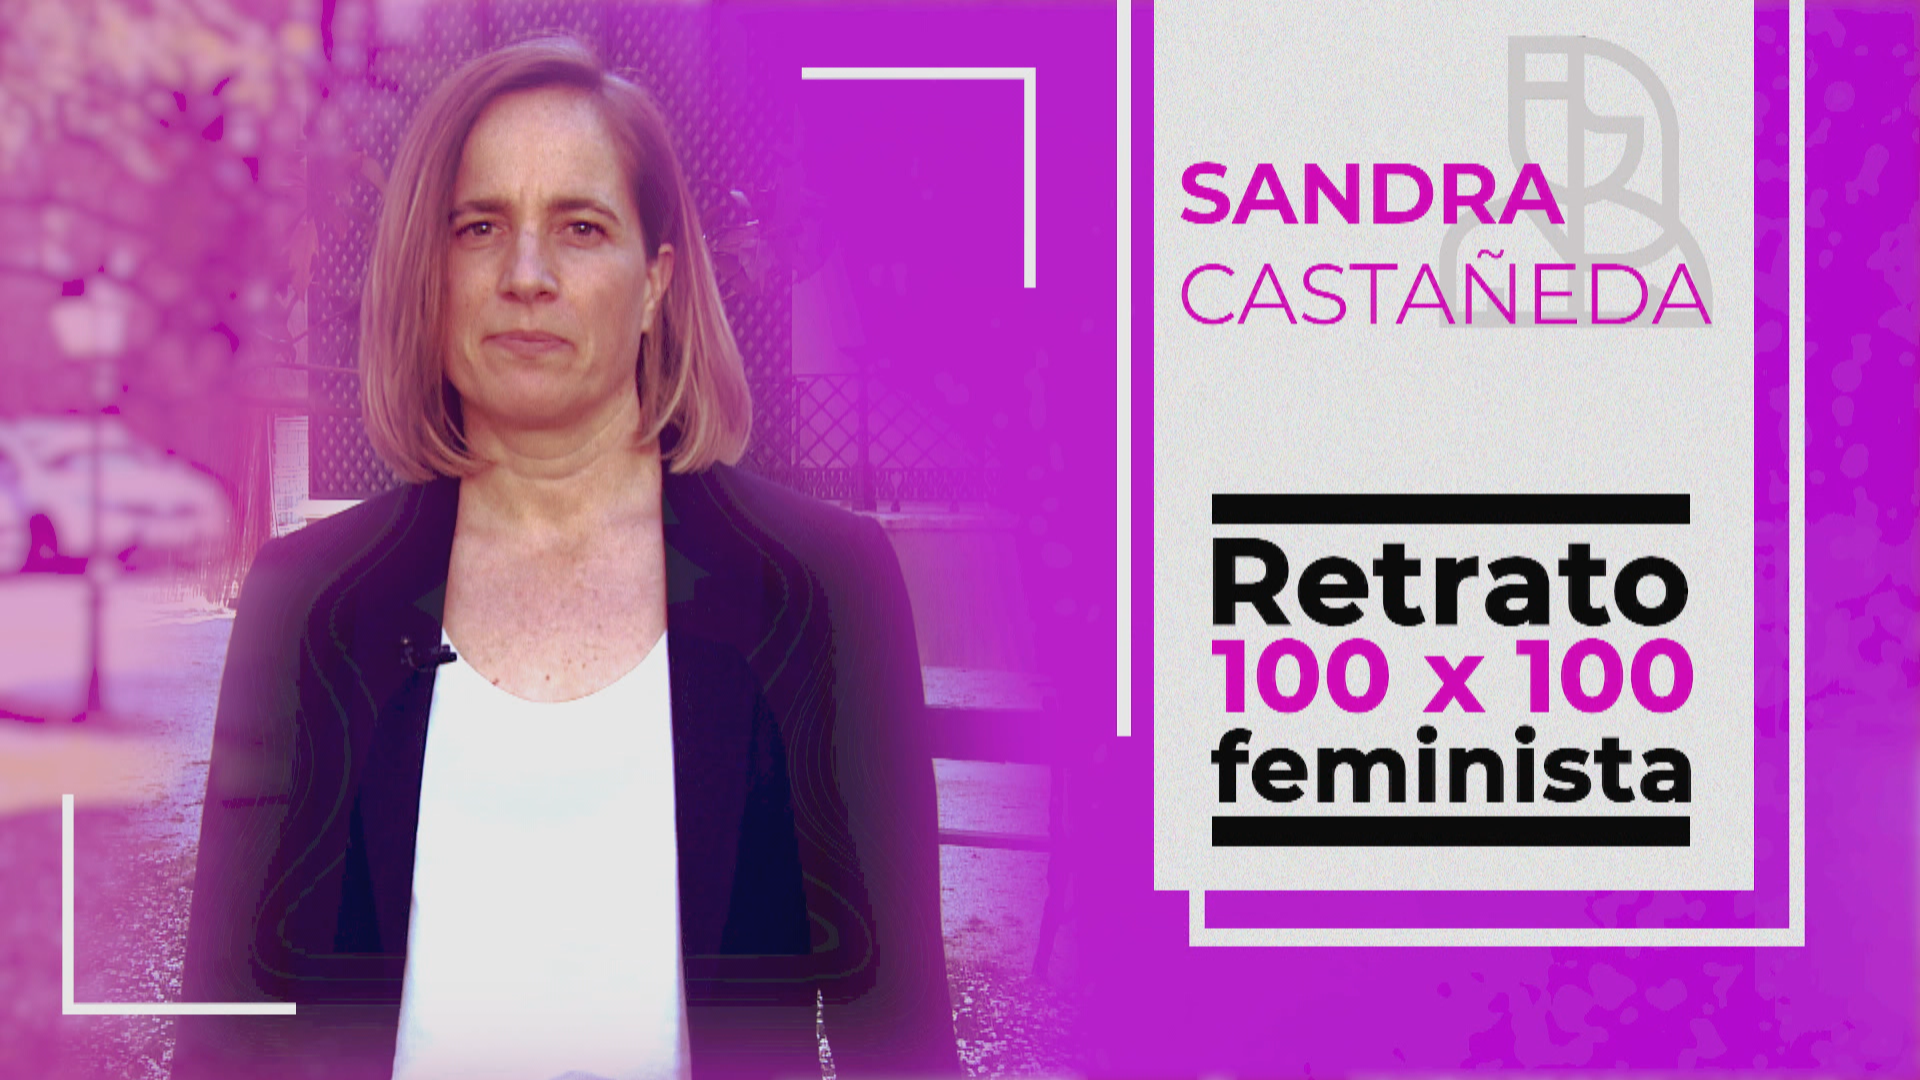 Ir al Video Objetivo Igualdad - Retrato 100x100 feminista: Sandra Castañeda, responsable de banca ética